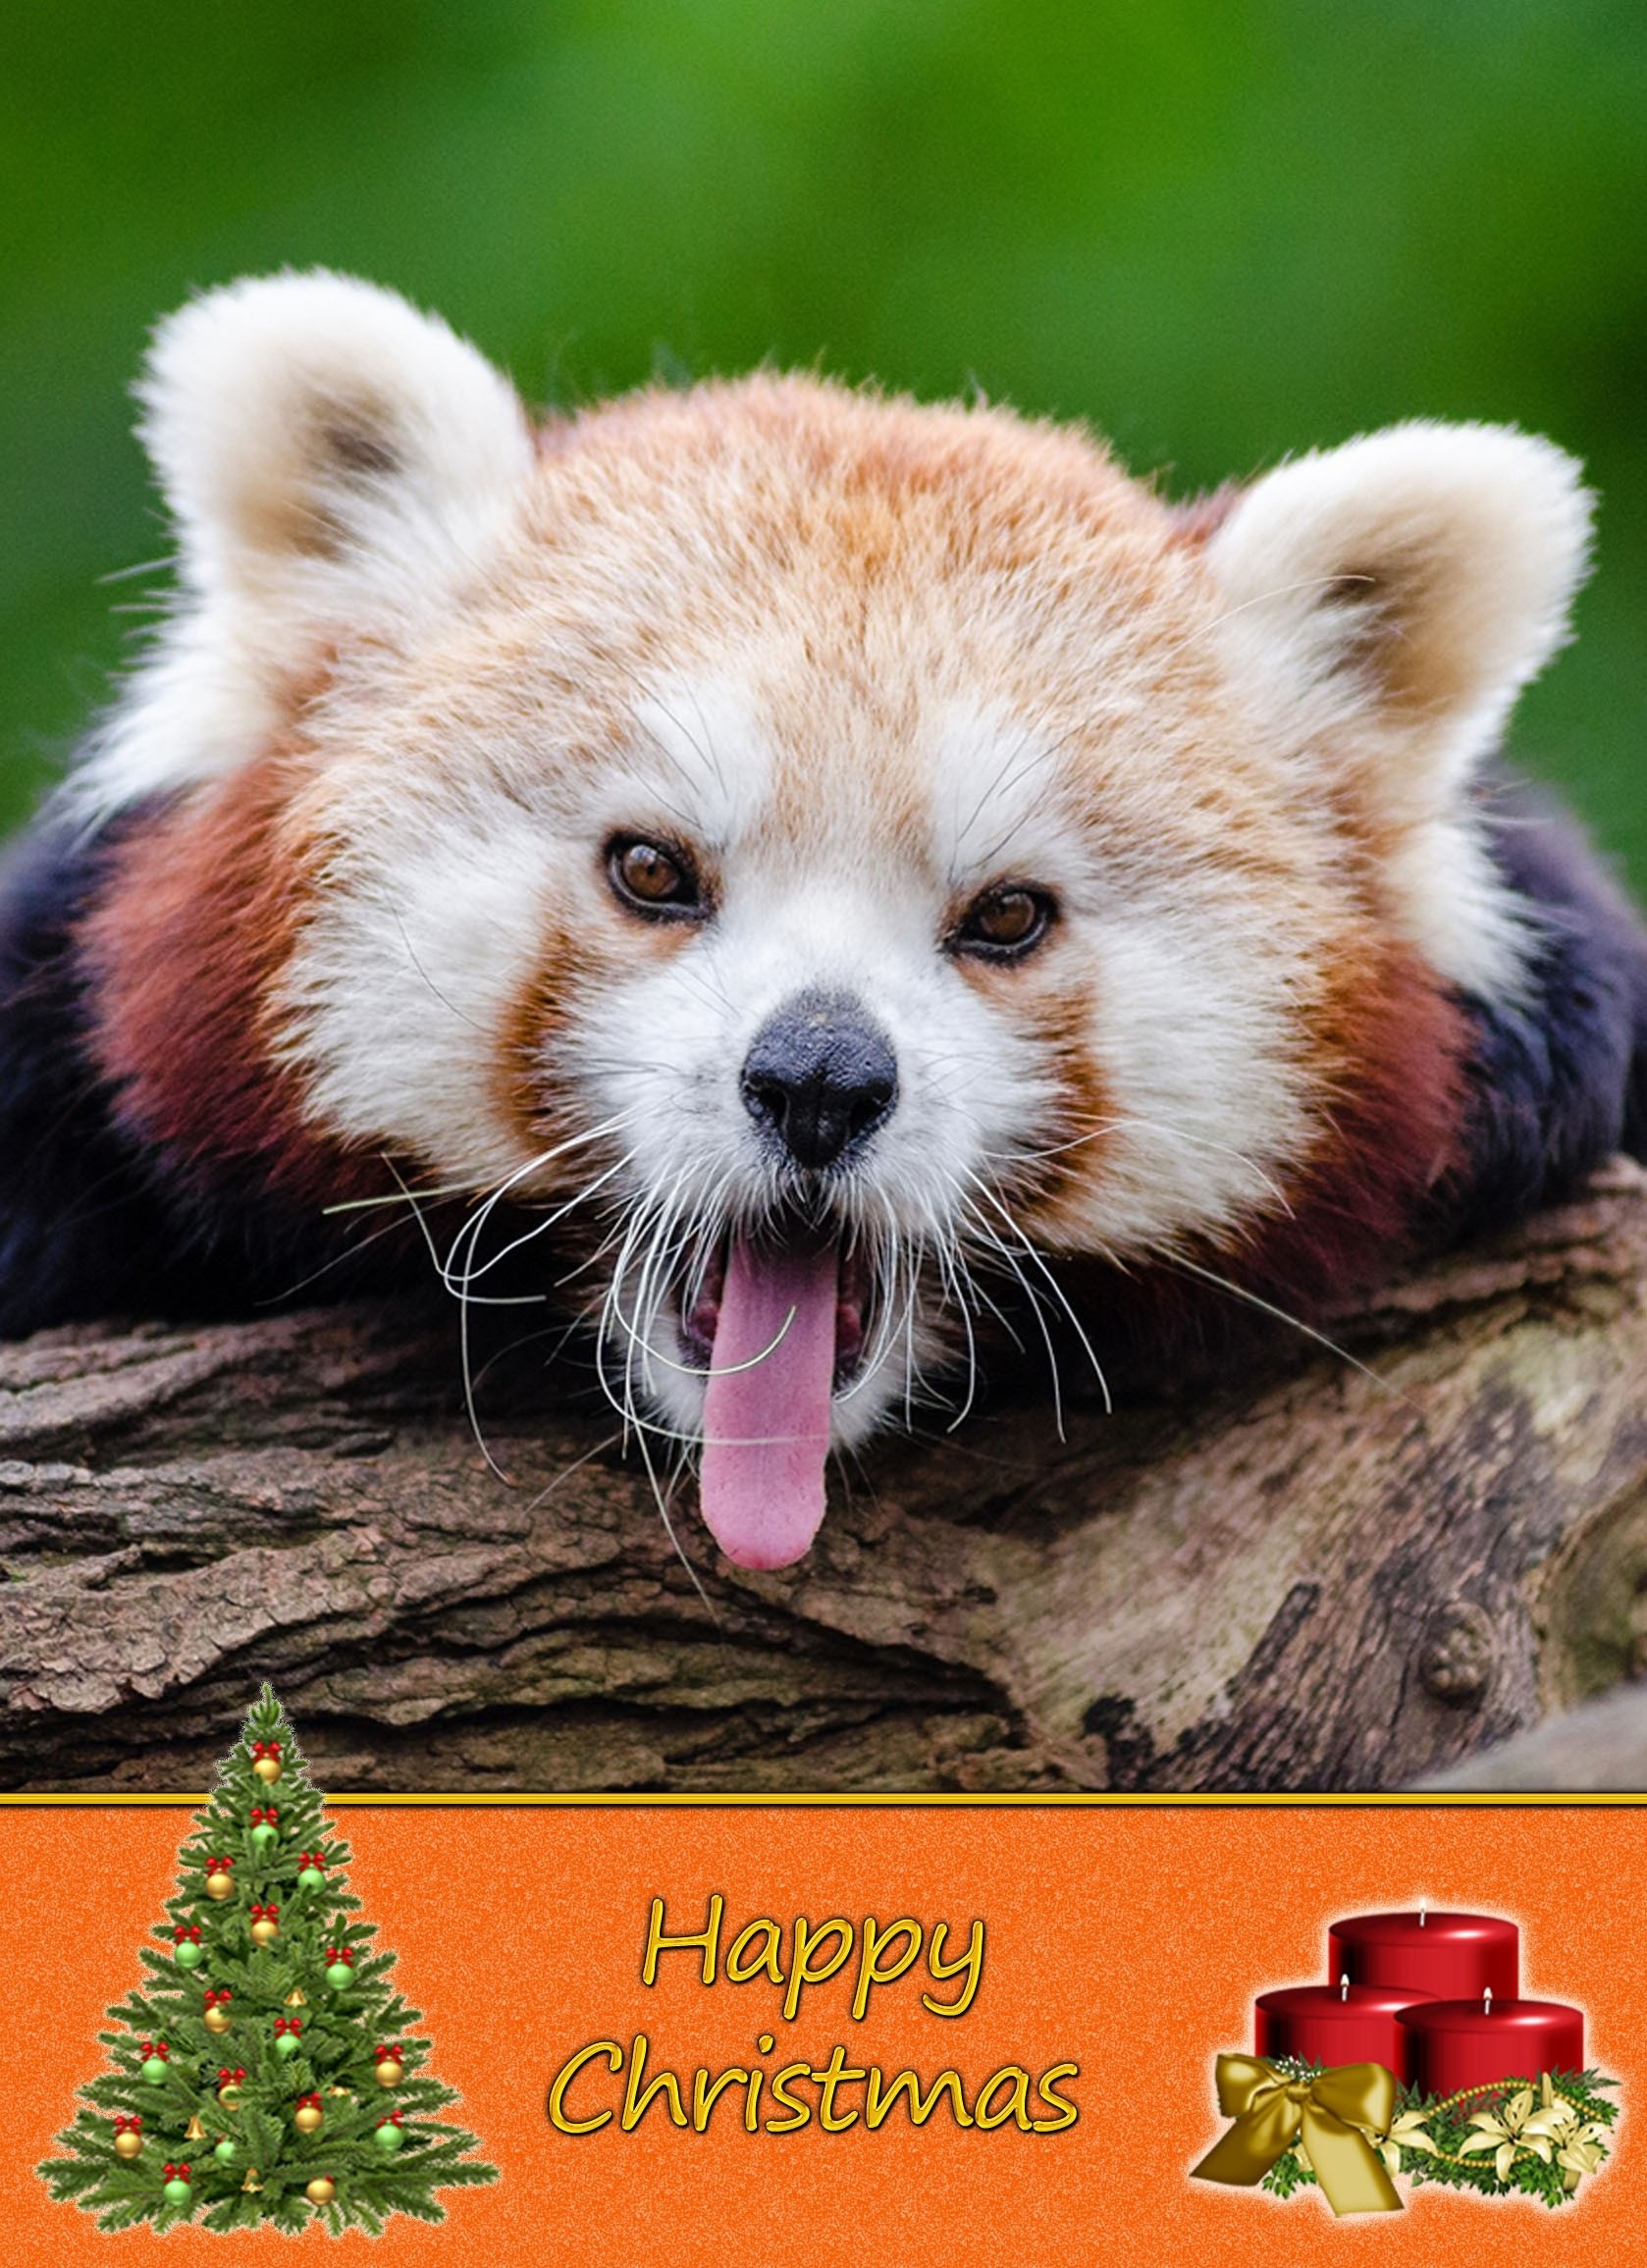 Red Panda christmas card